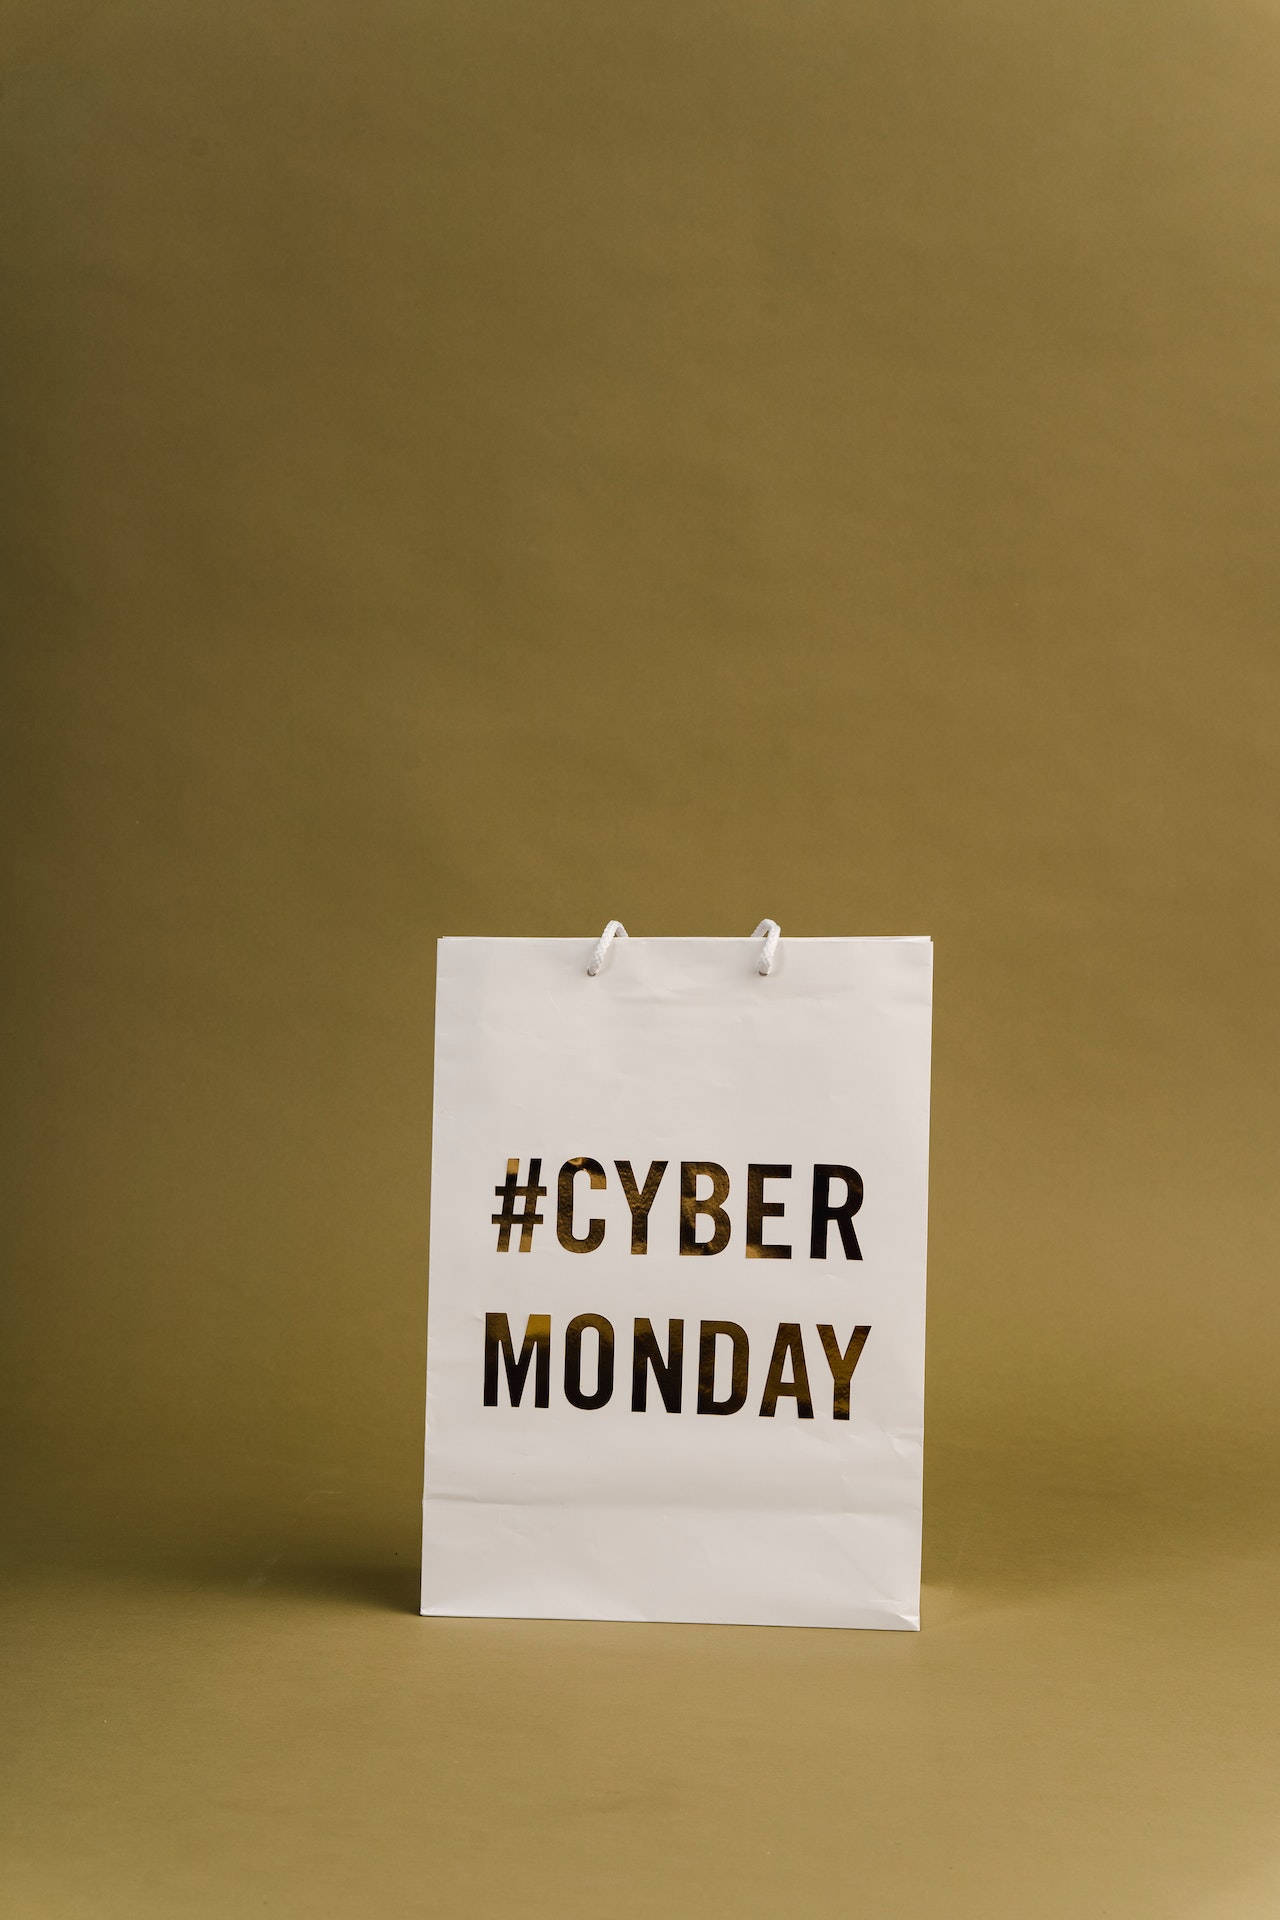 Cyber Monday White Shopping Bag Background